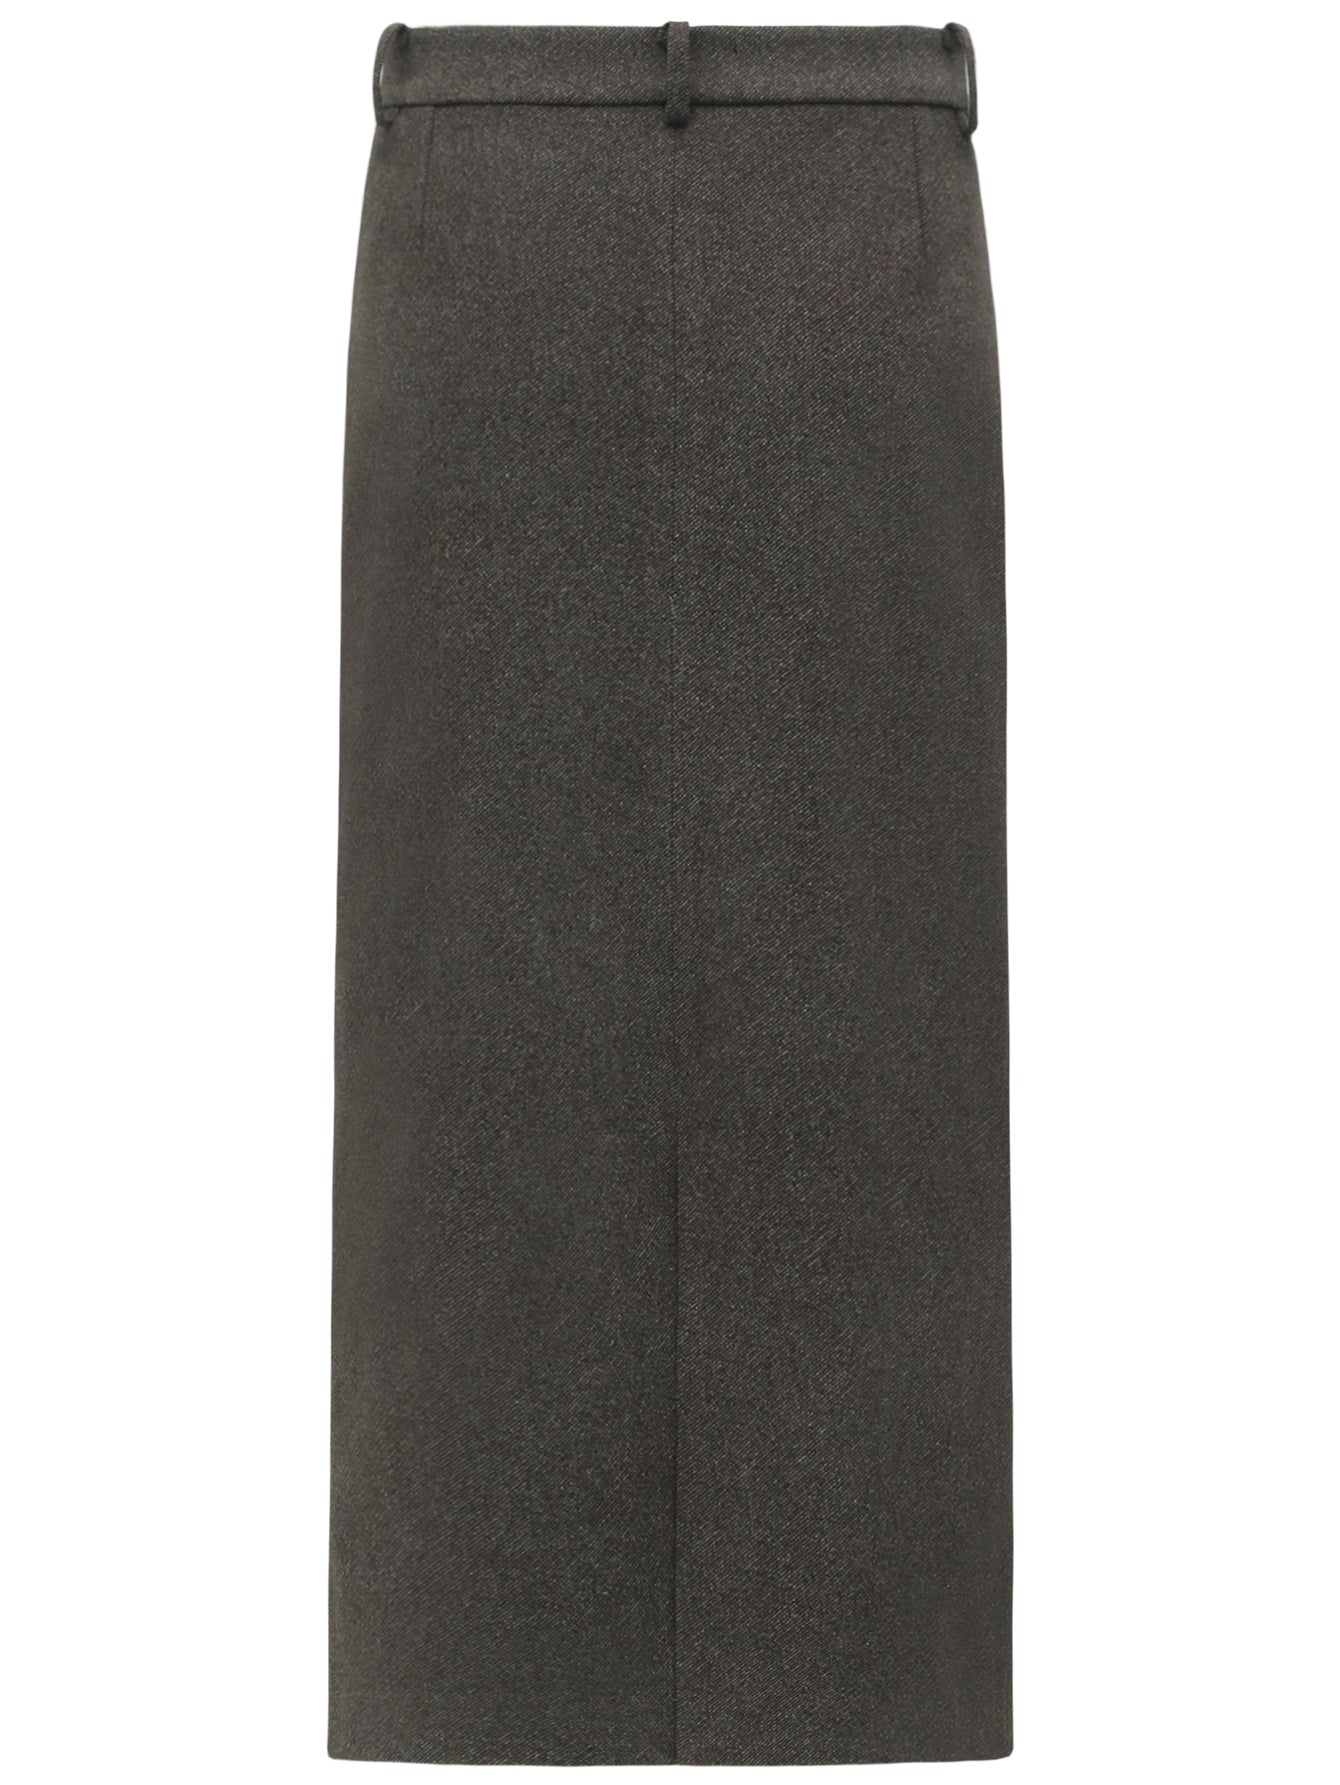 high-waisted-modern-charcoal-midi-skirt-for-winter_all_charcoal_5.jpg